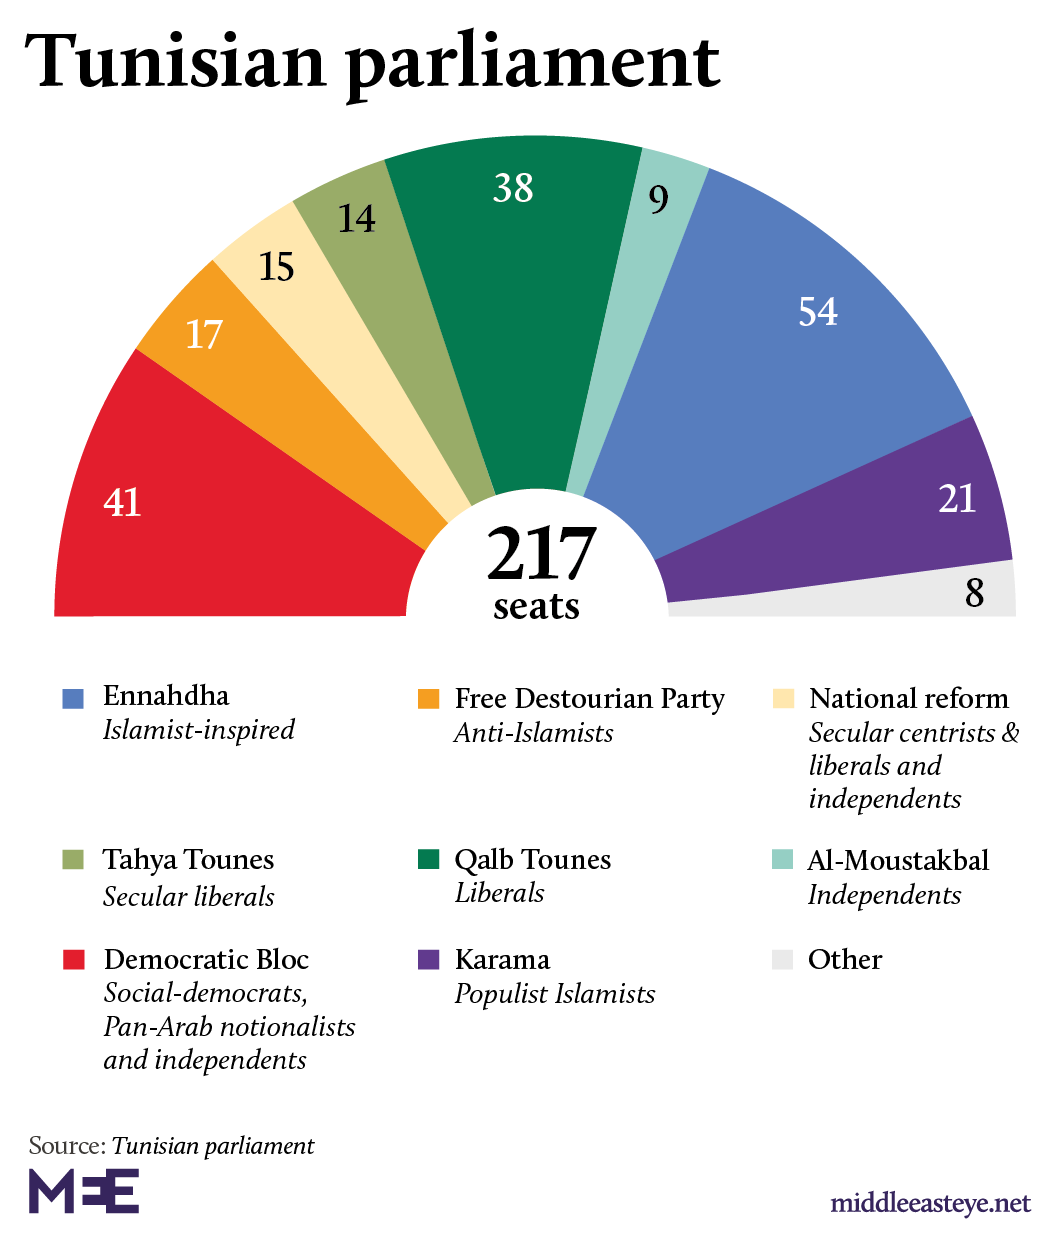 Tunisia Parliament: Distribution of seats